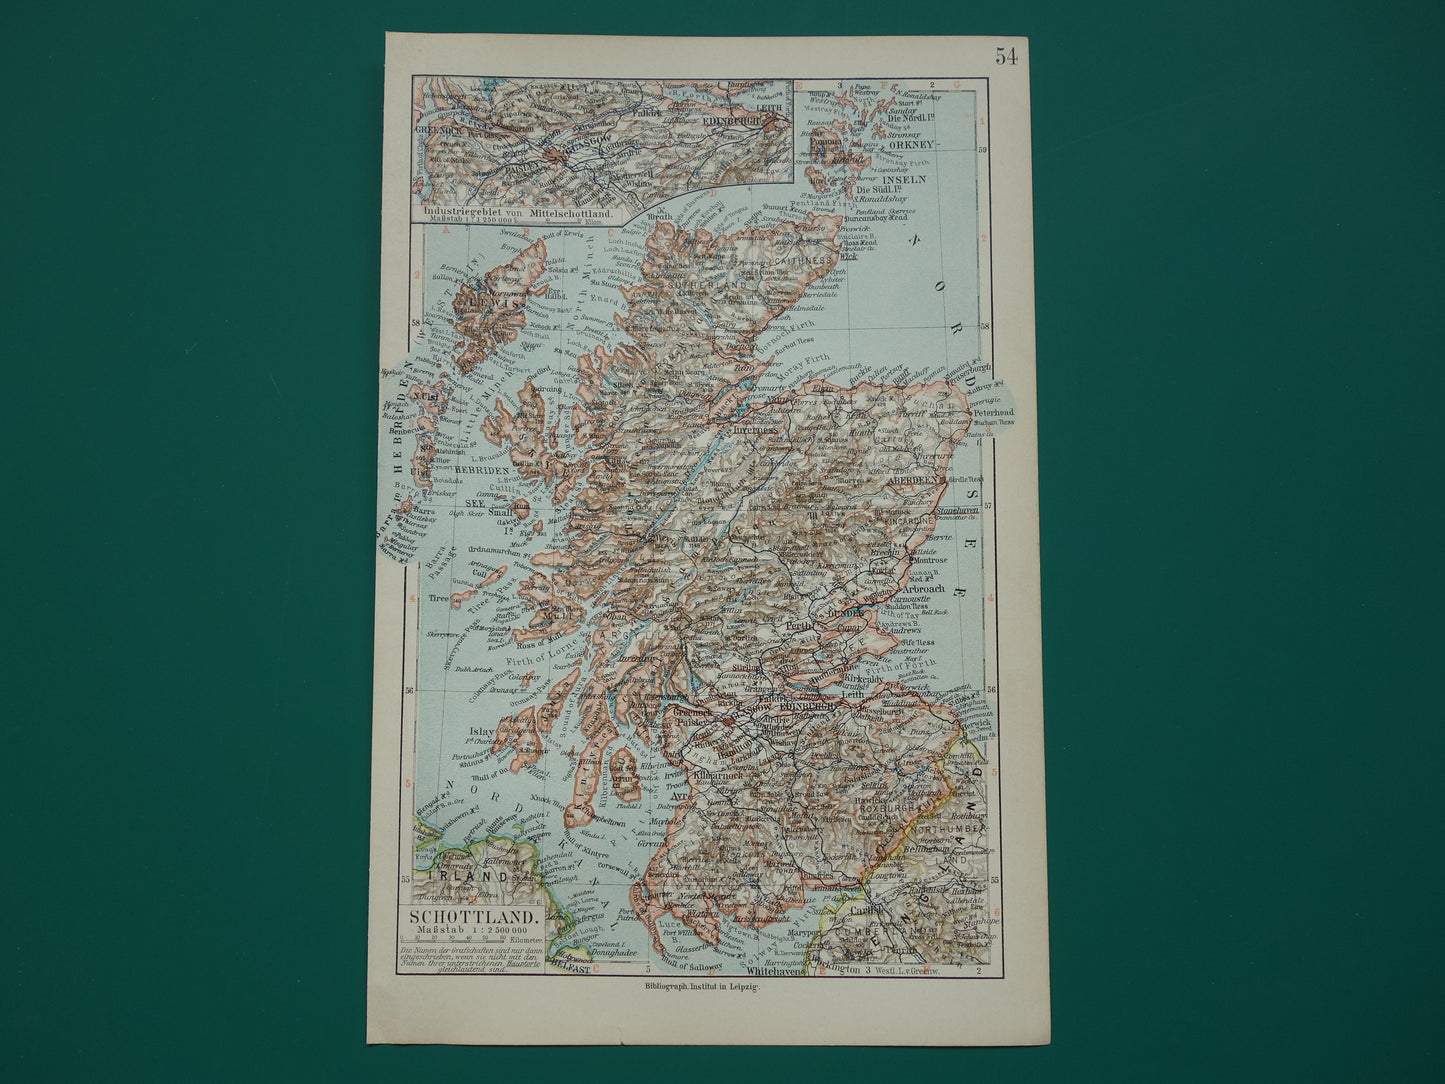 SCHOTLAND kleine antieke kaart van Schotland uit 1905 - originele gedetailleerde landkaart Edinburgh Glasgow